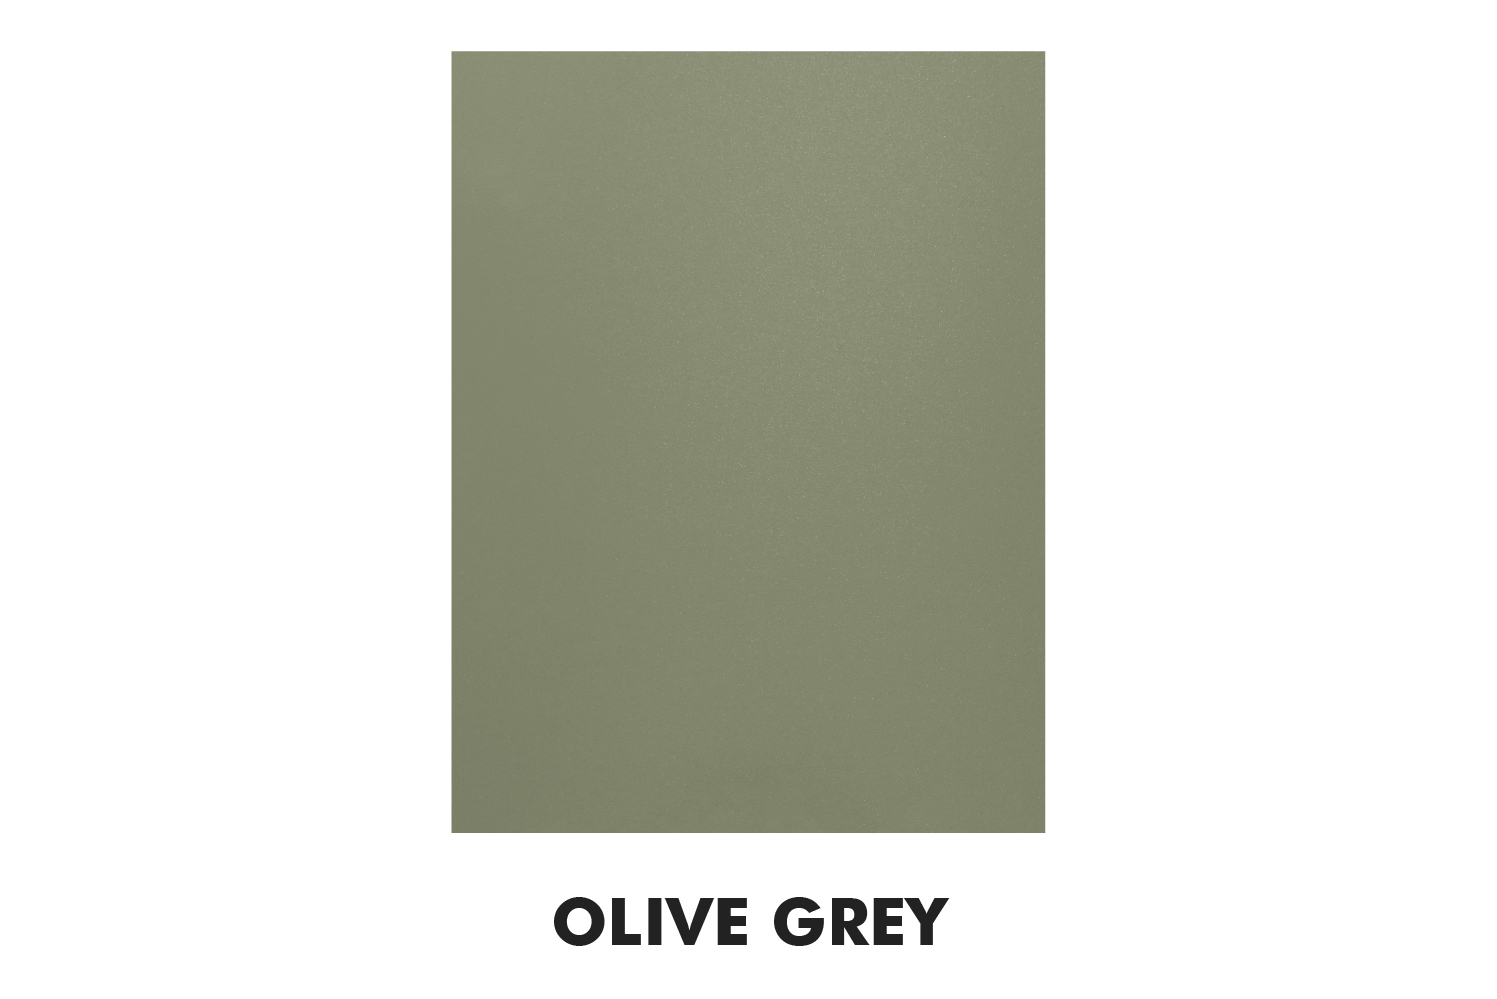 Olive grey